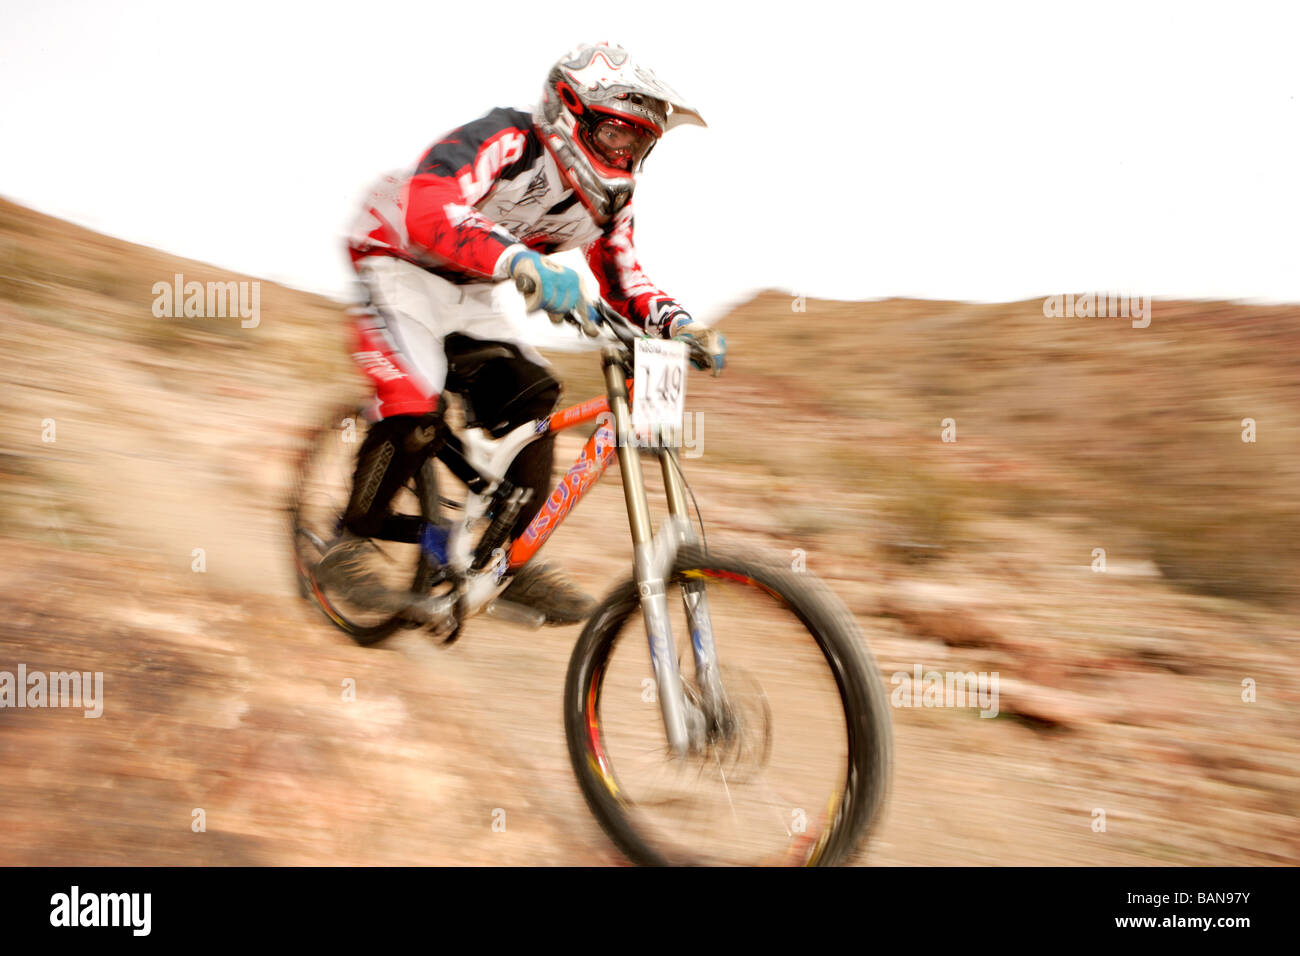 Downhill Mountain Bike Racer at Bootleg Canyon Nevada Stock Photo